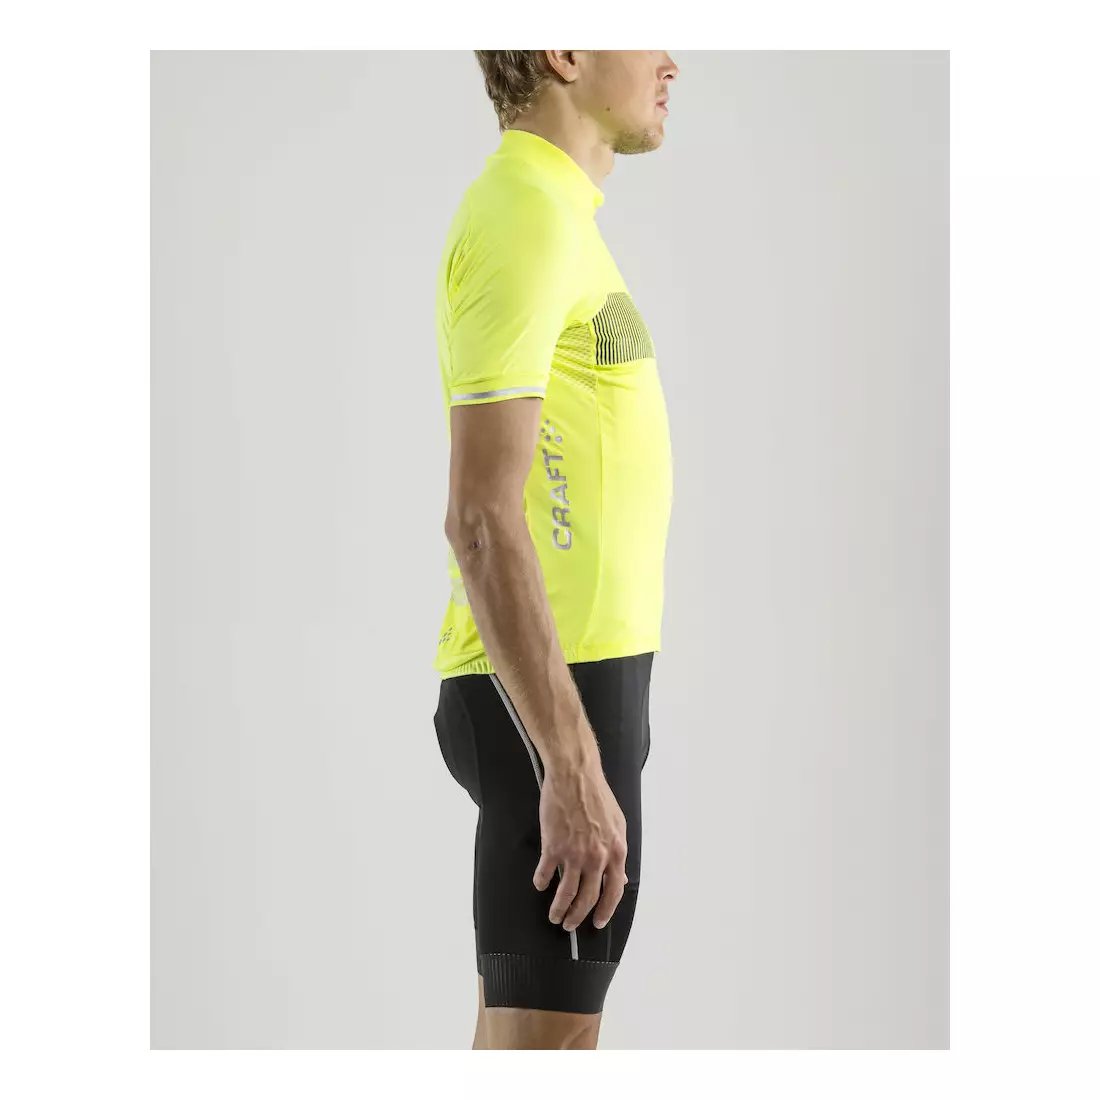 CRAFT Verve Glow men's cycling jersey, fluorine yellow, 1904995-2809